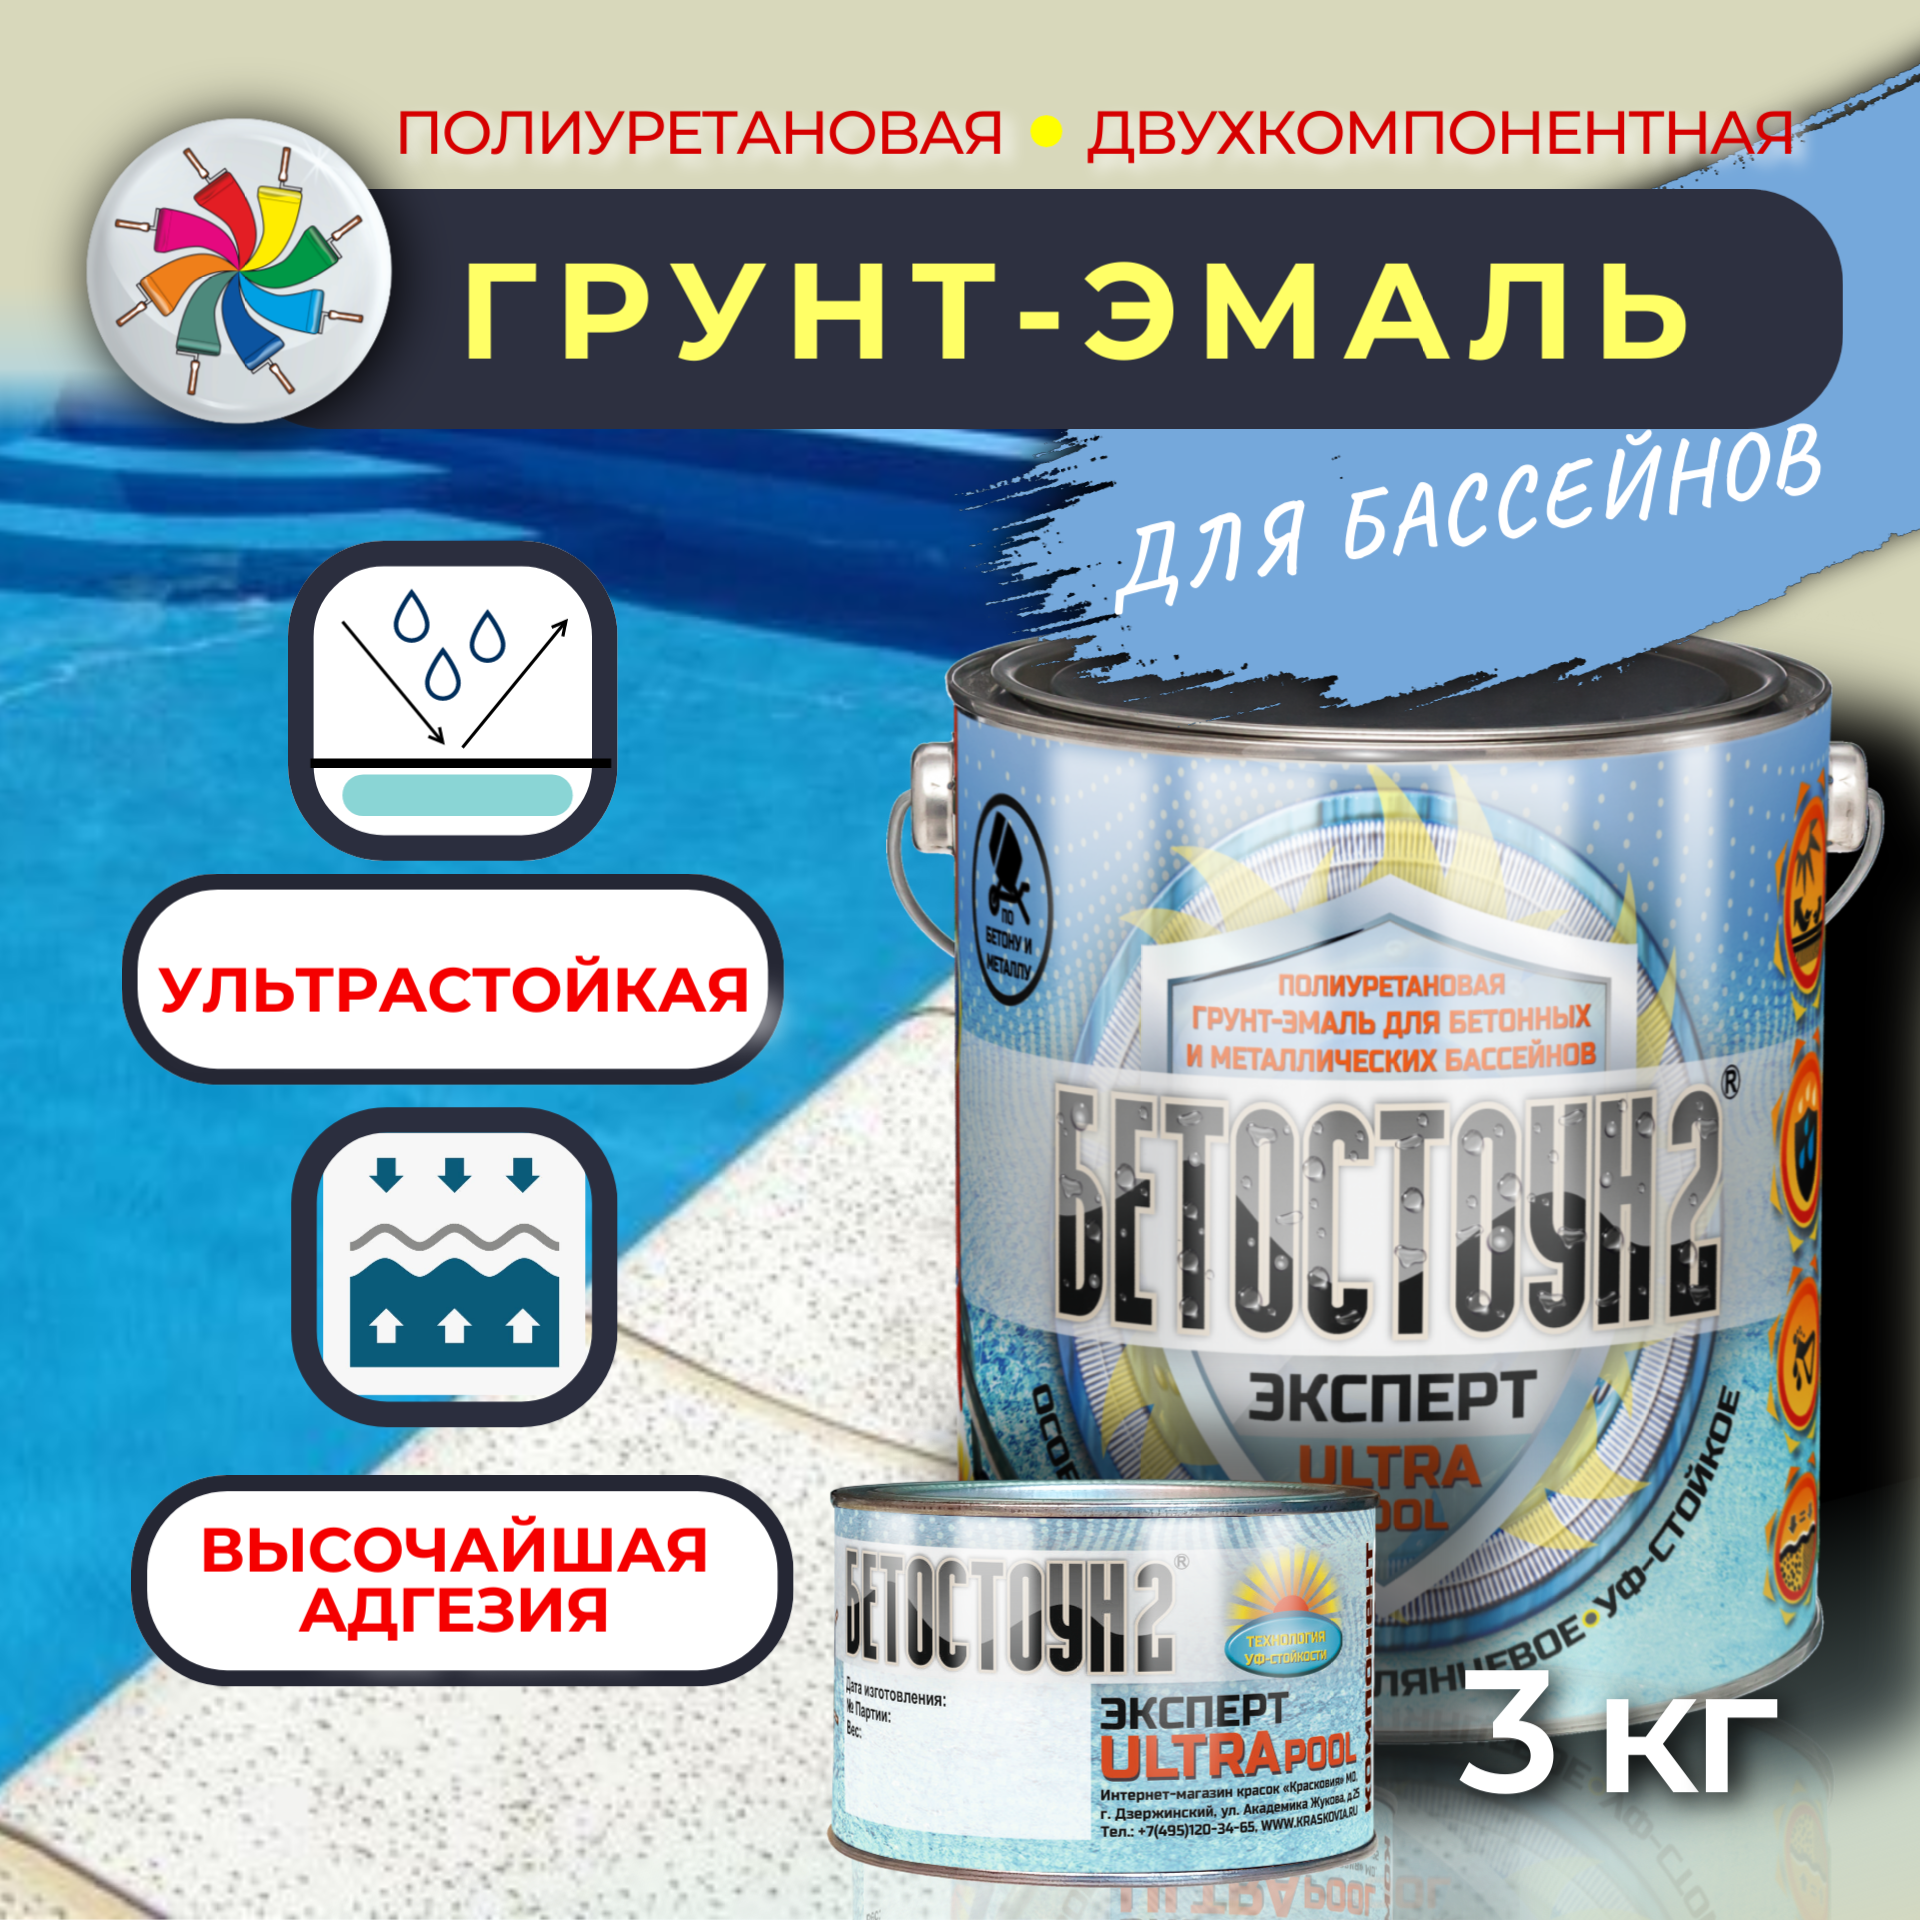 Полиуретановая краска для бассейна Красковия Бетостоун-2 Эксперт ULTRAPOOL, RAL 5012 3кг